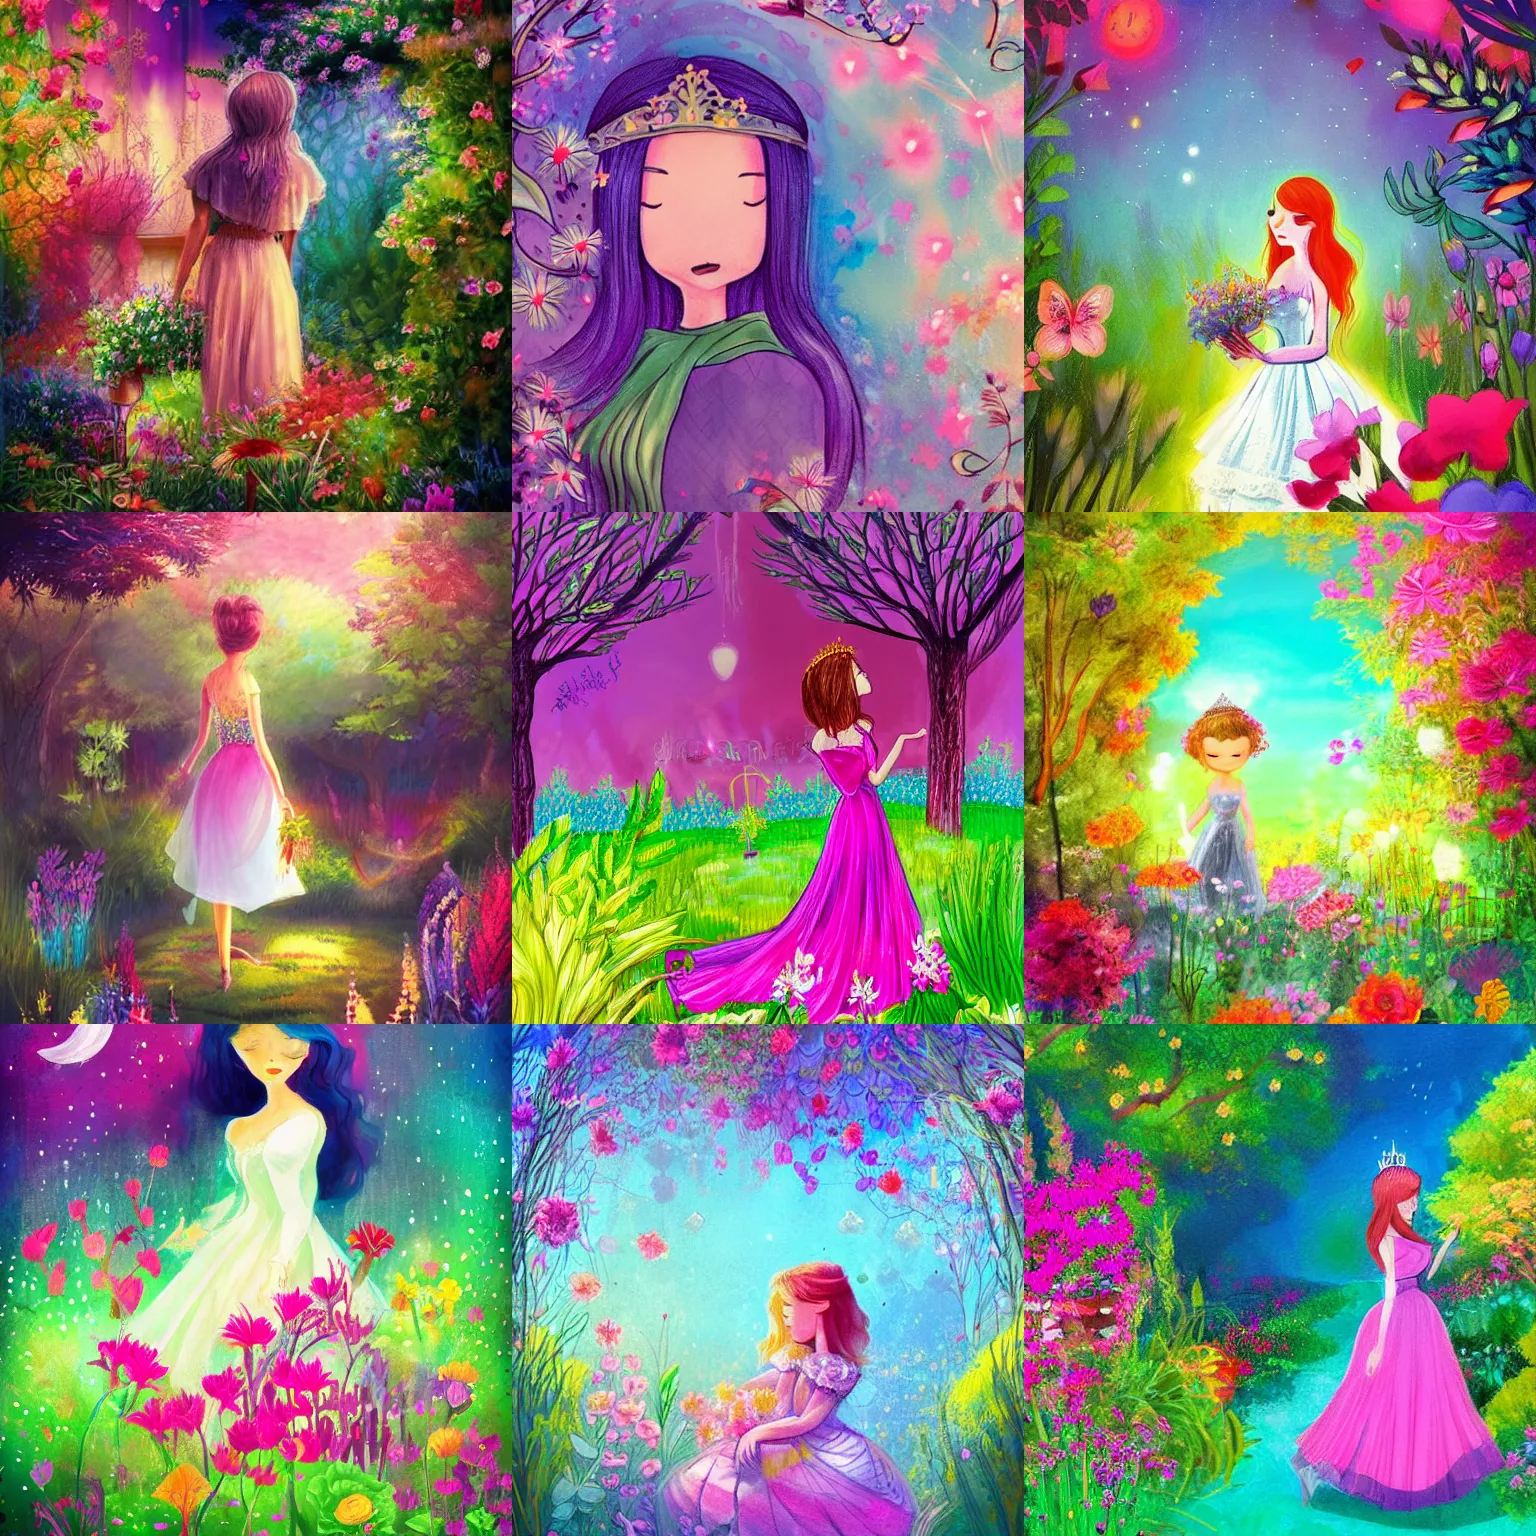 Prompt: kind princess, garden, atmosphere, vibrant, colorful, illustration, dreamy, art